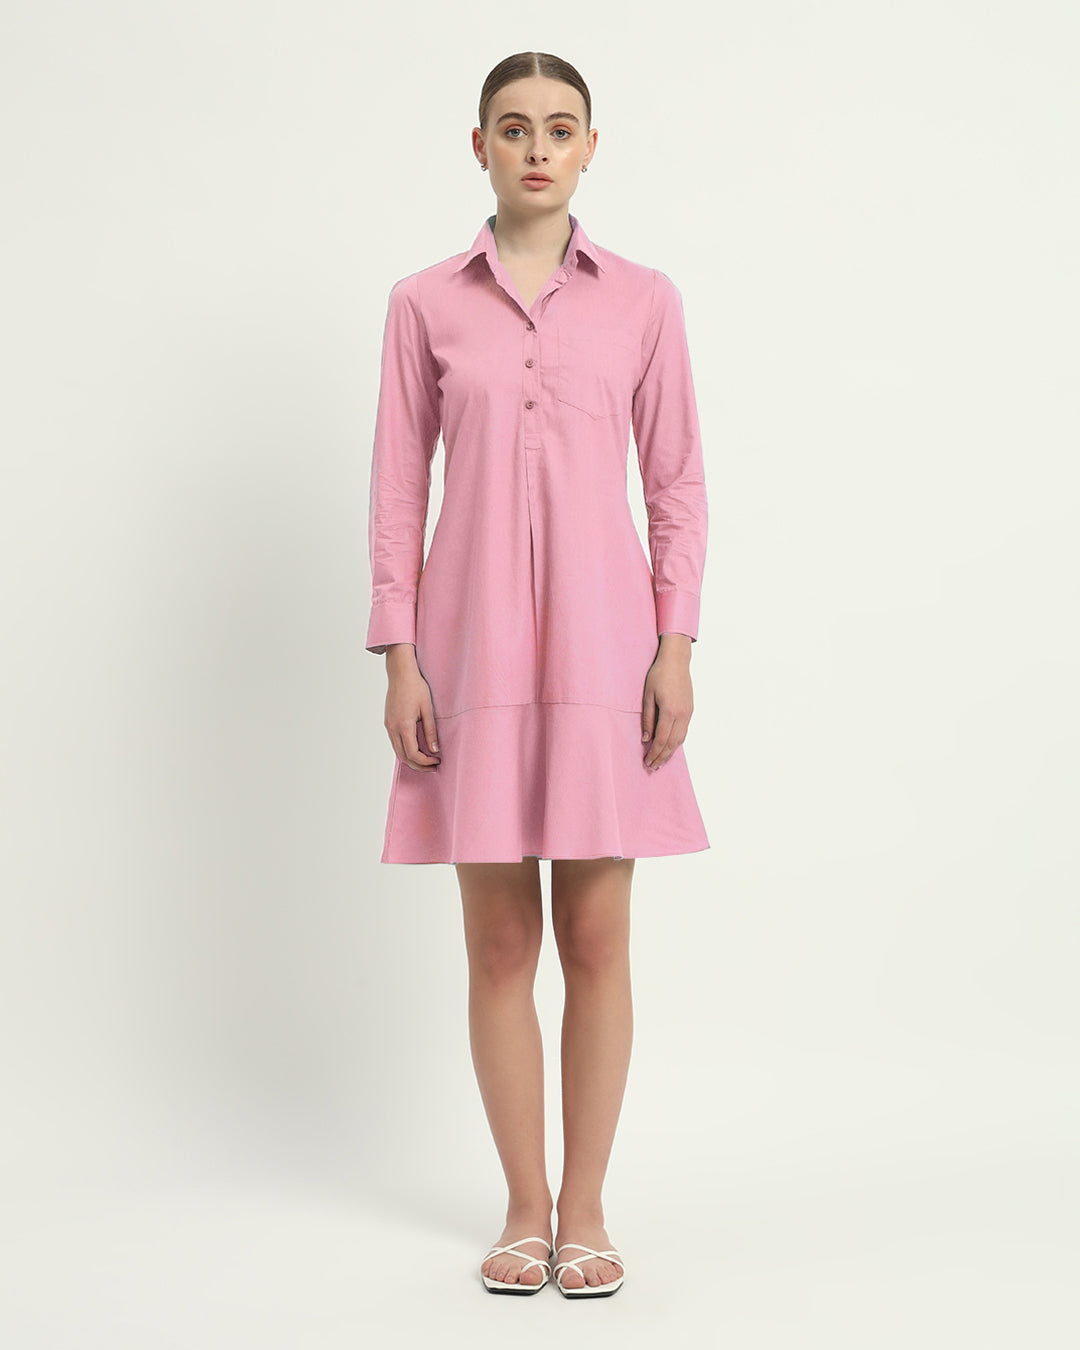 The Fondant Pink Medina Cotton Dress